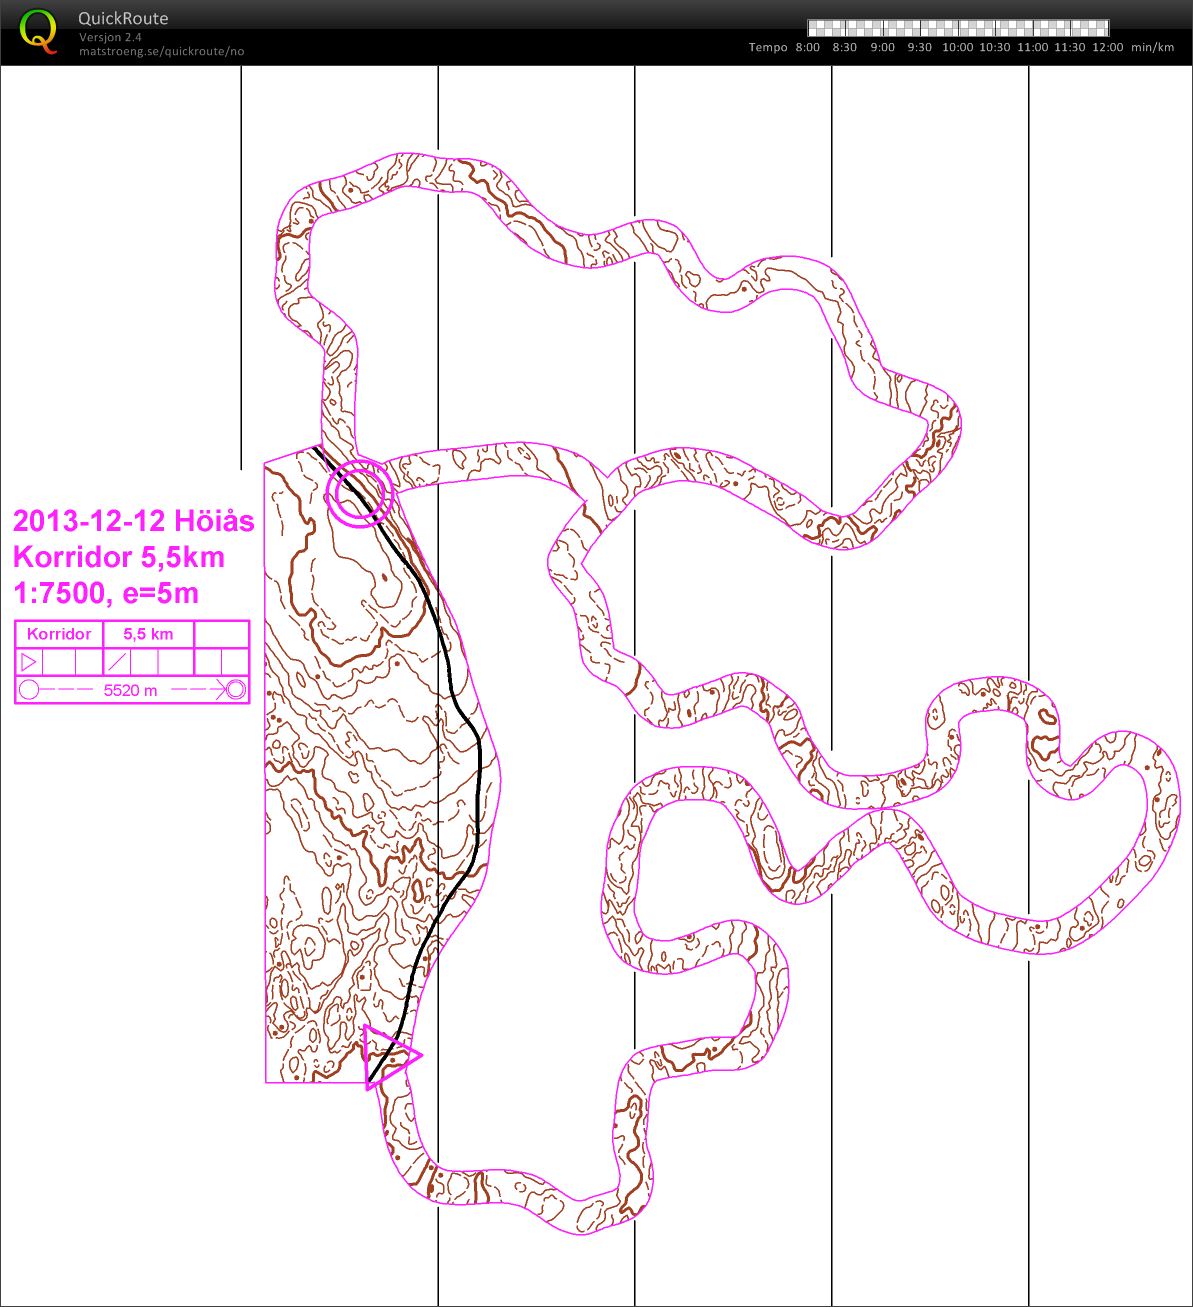 Kurvekorridor Høiås (2013-12-12)